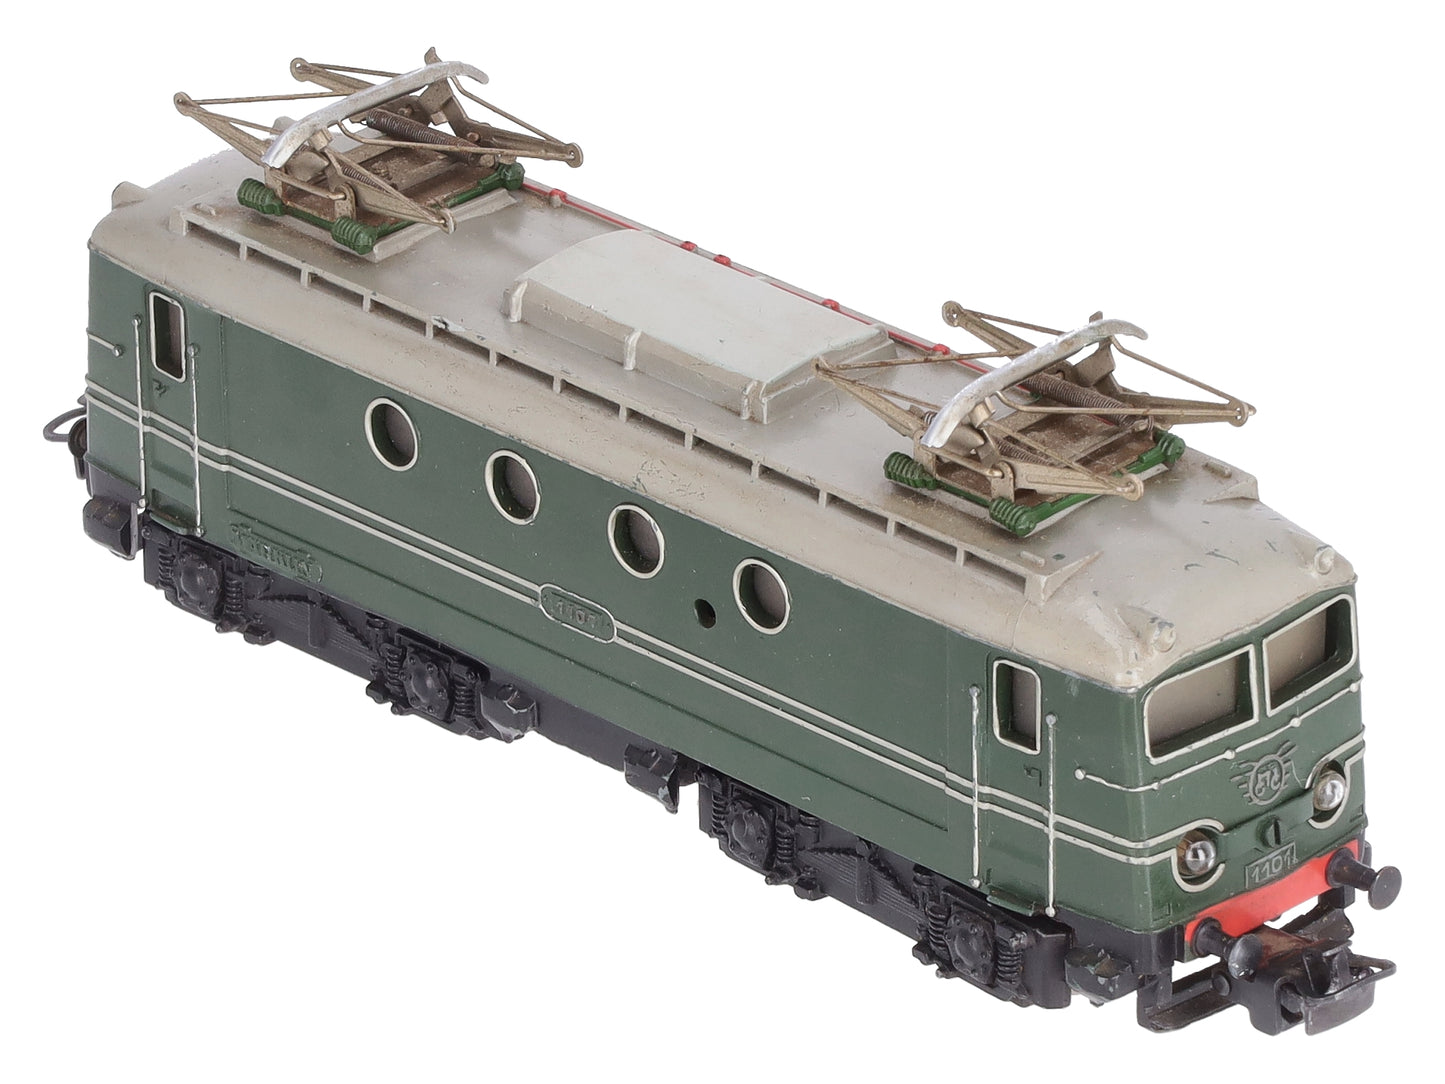 Marklin 3013 HO Scale B-B Electric Locomotive #1101 VG